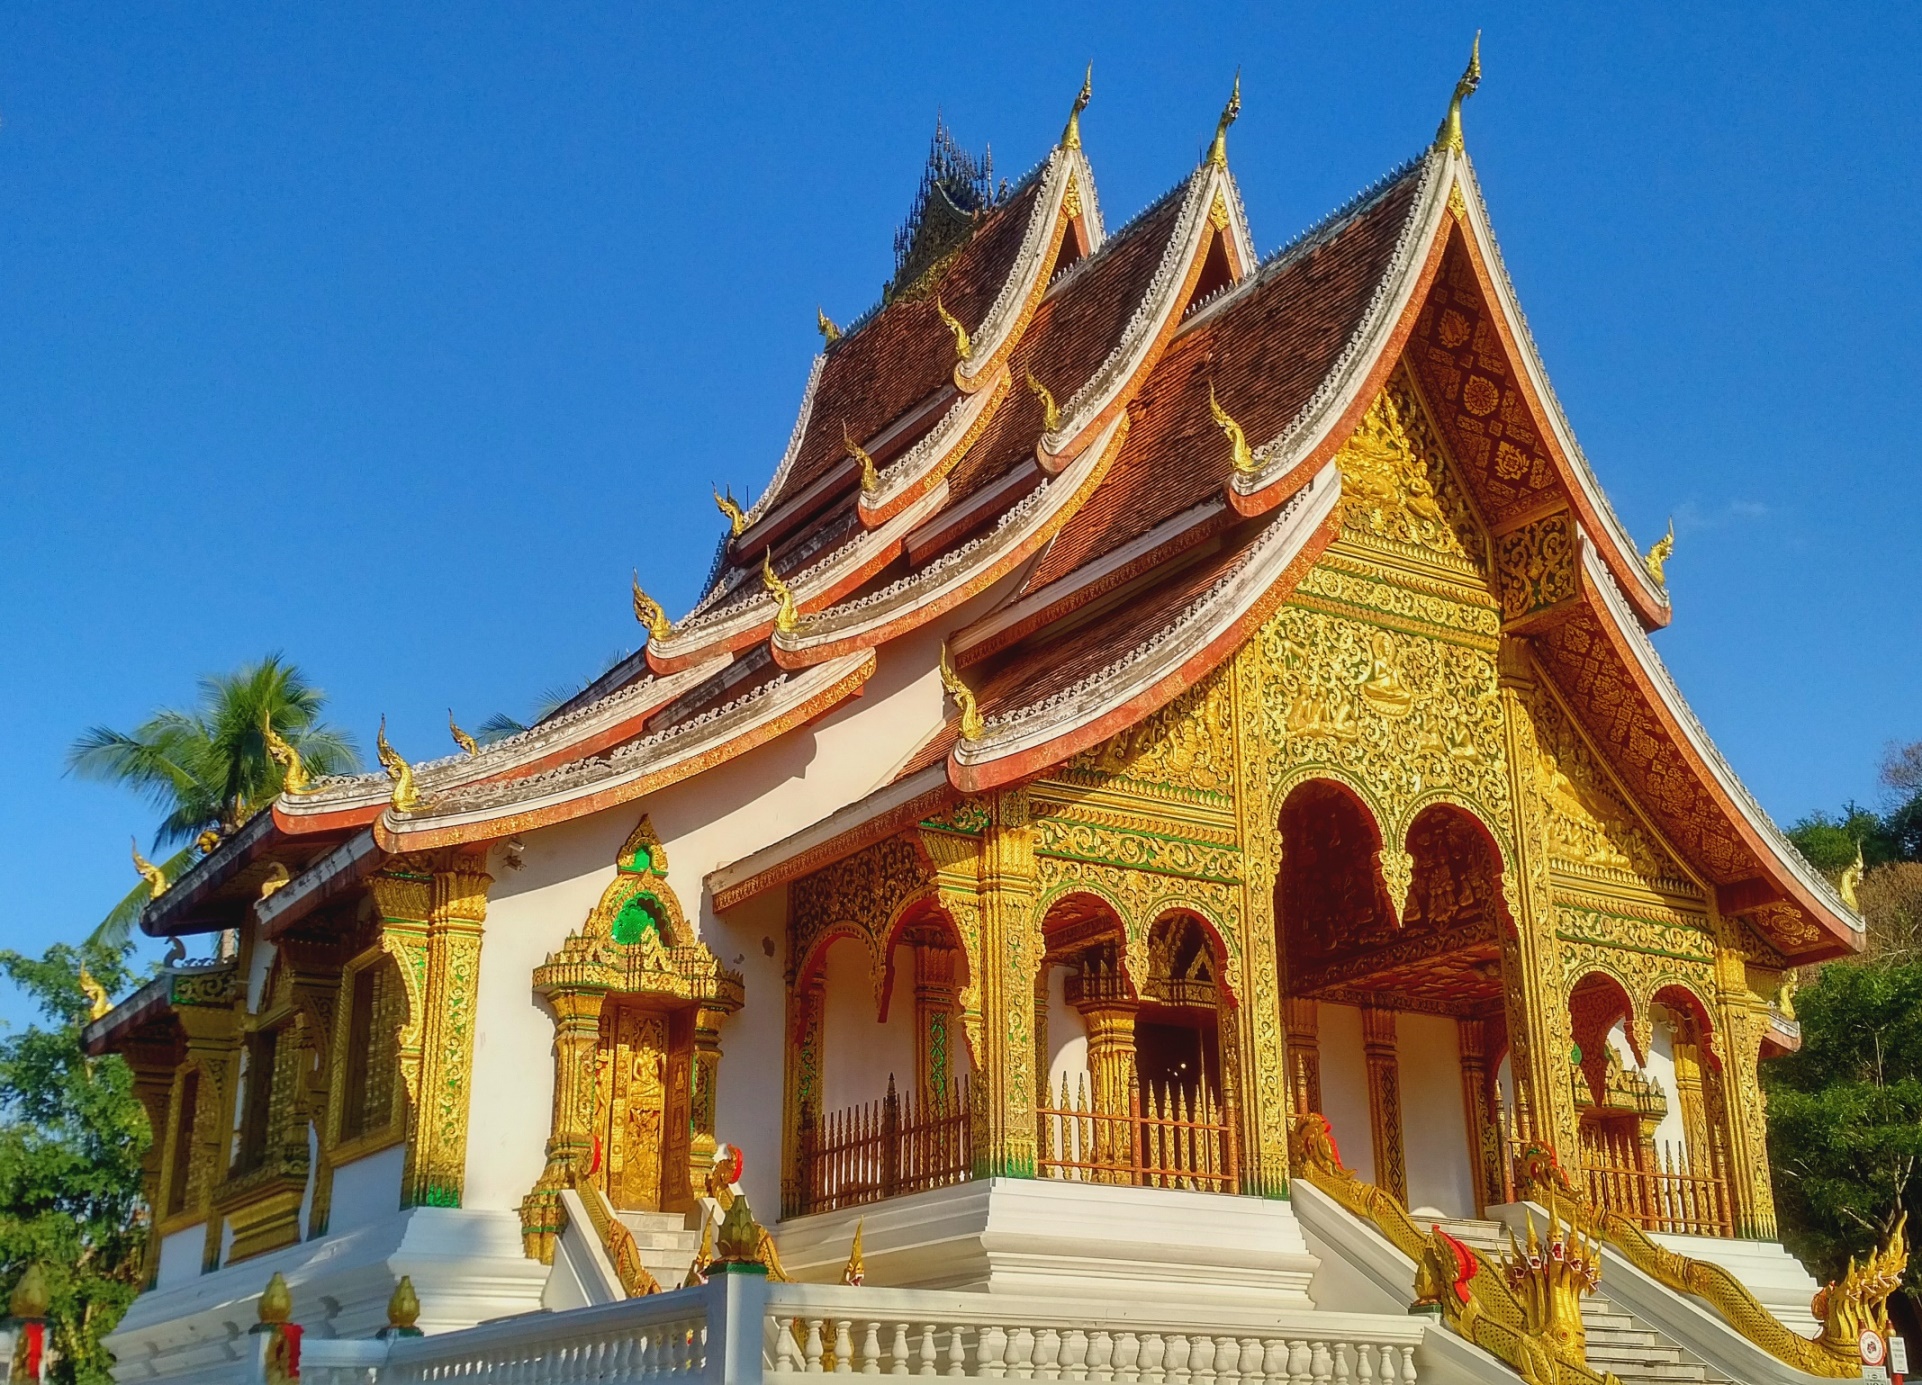 Haw Pha Bang temple